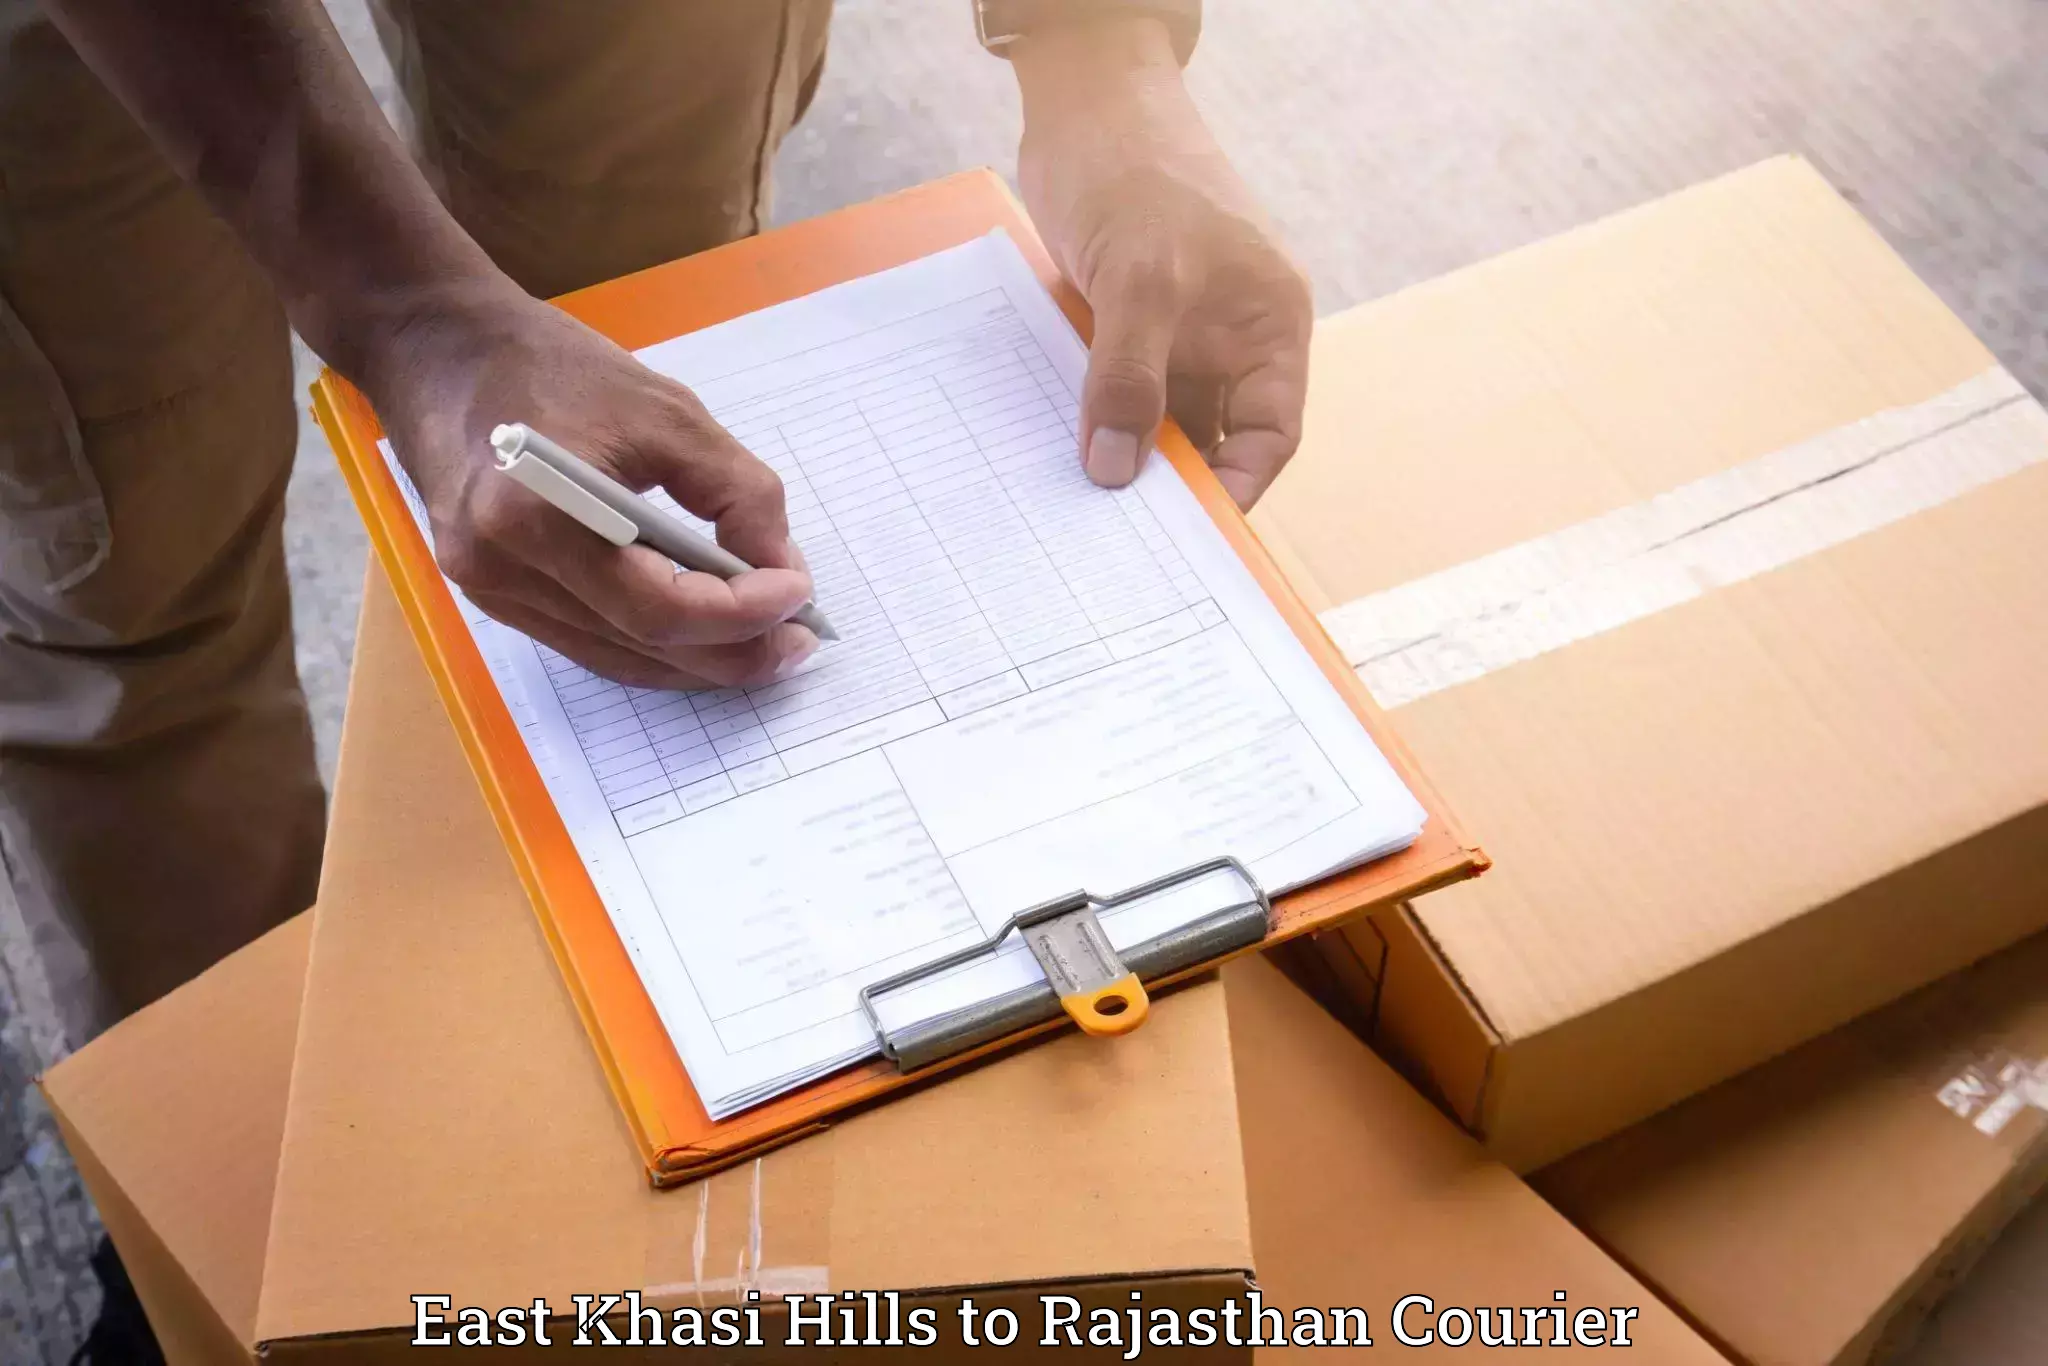 Dependable moving services East Khasi Hills to Pokhran